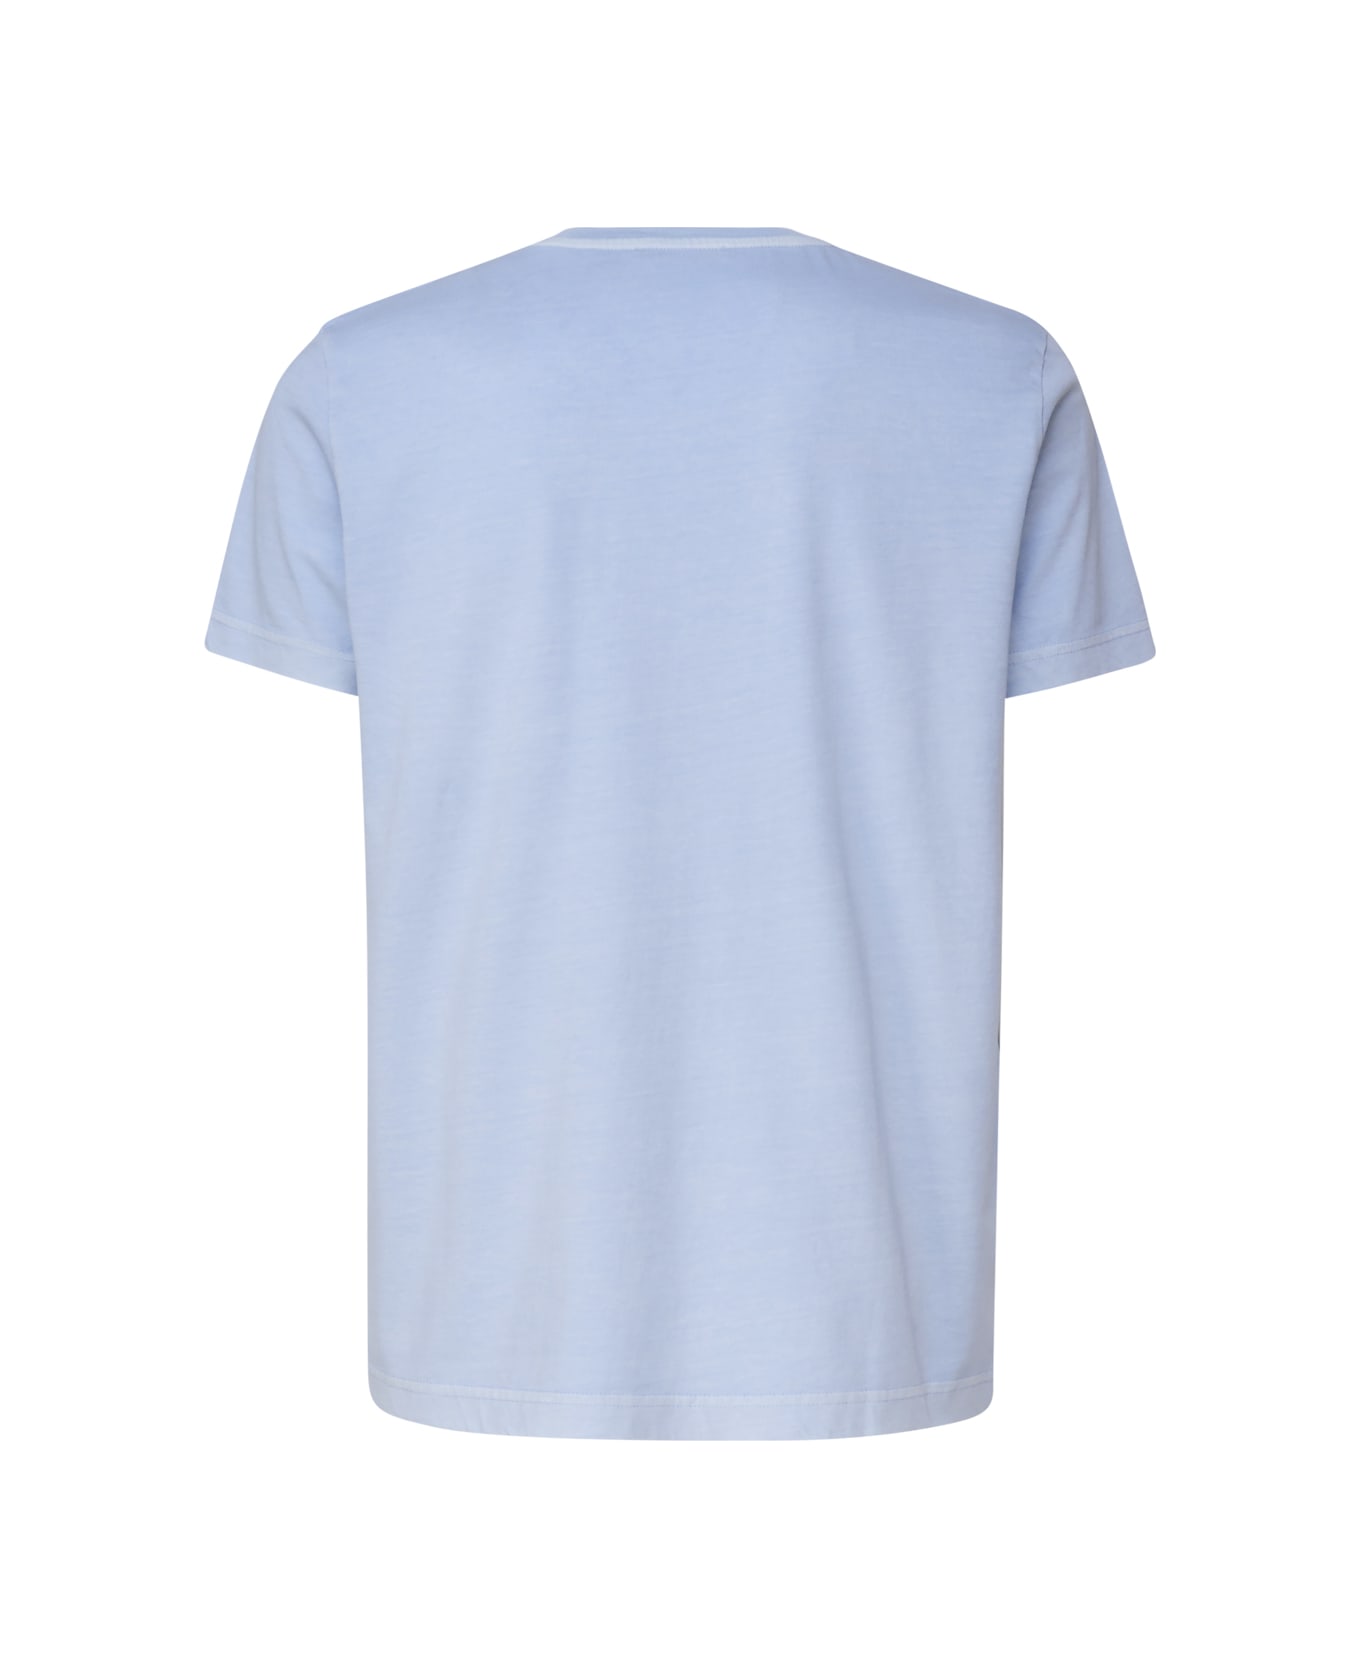 Fay T-shirt With Pocket - Light blue